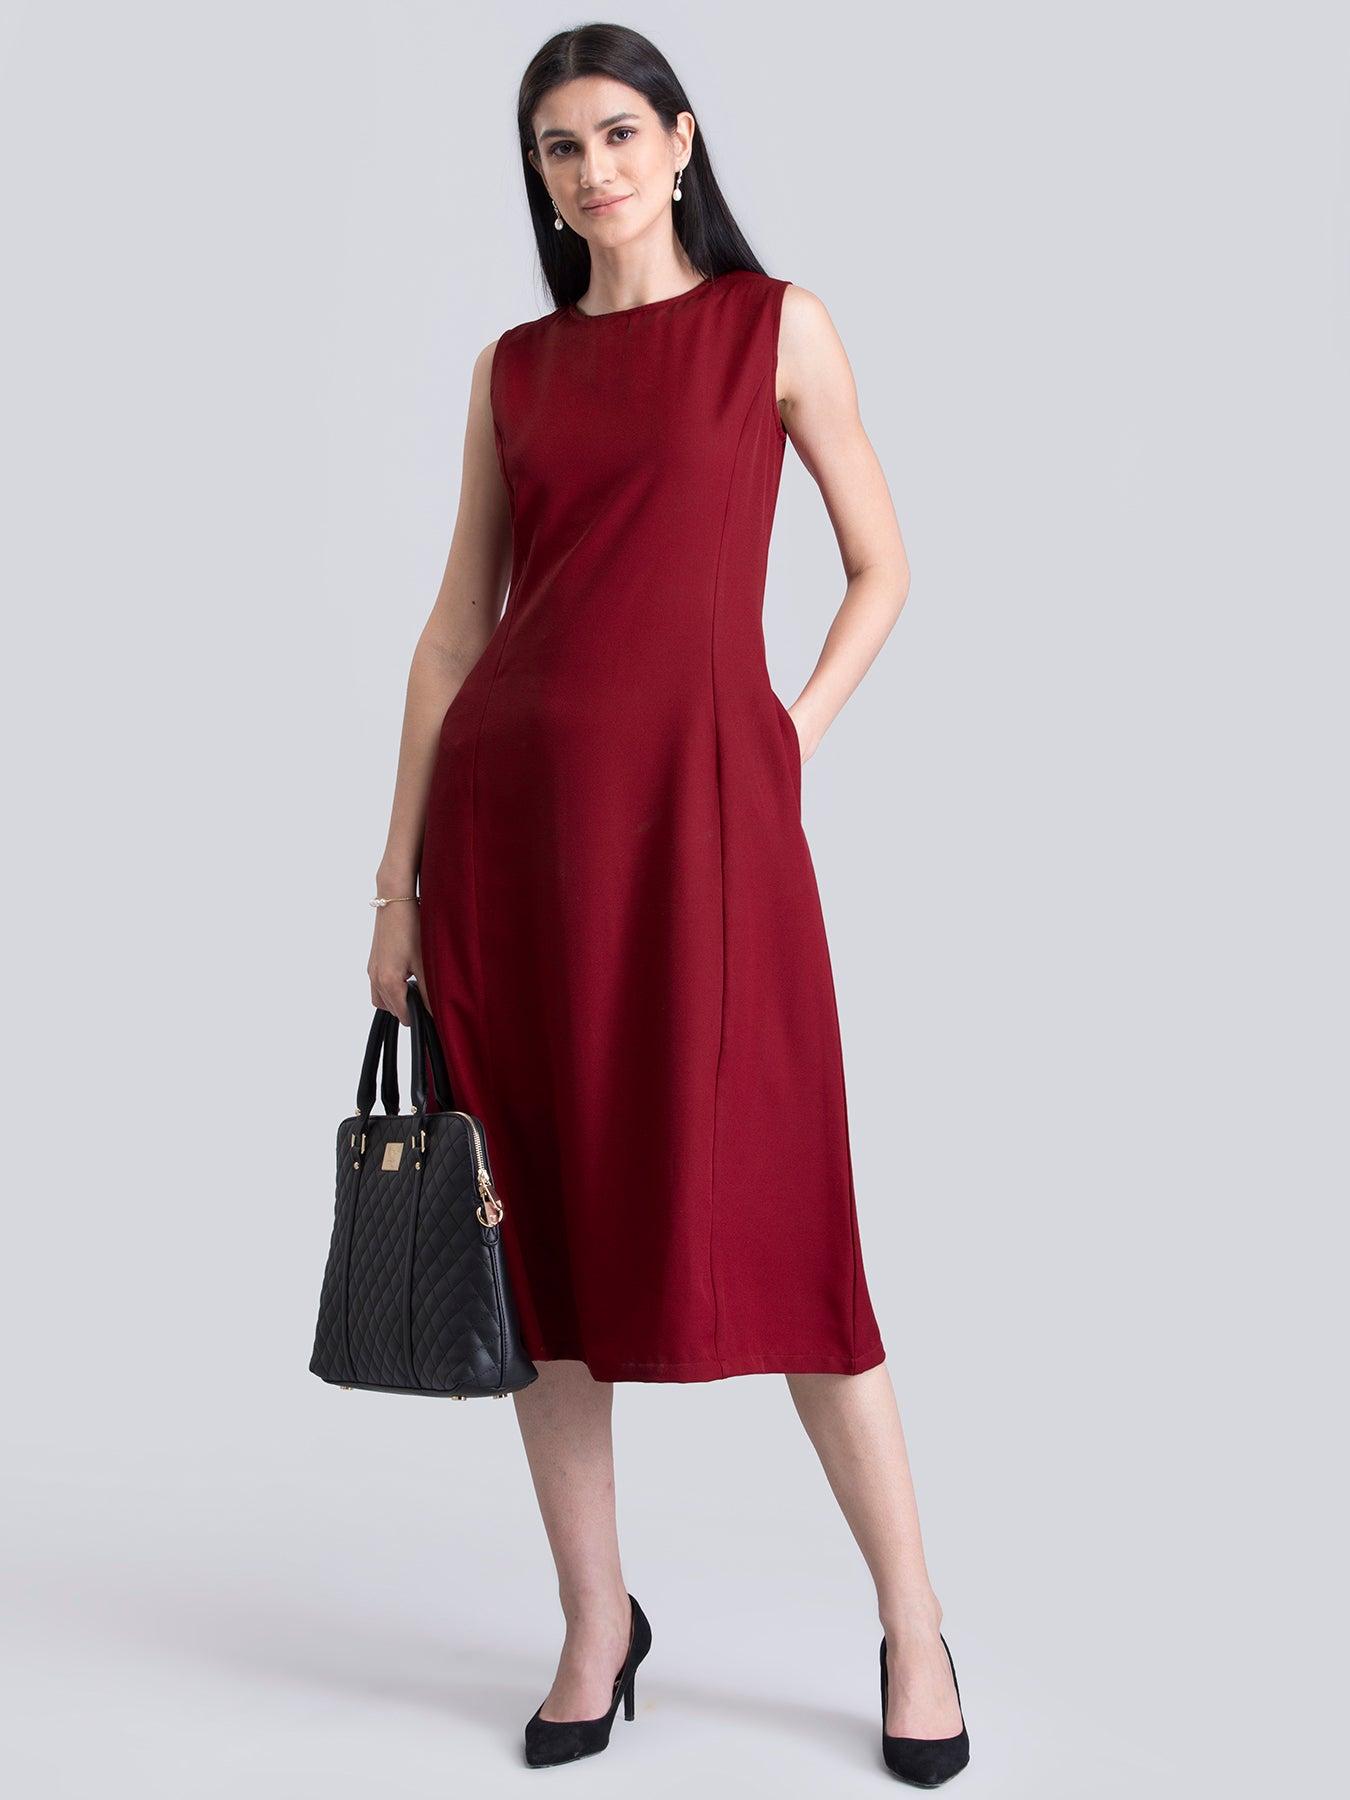 Stylised Neck A Line Dress - Red| Formal Dresses